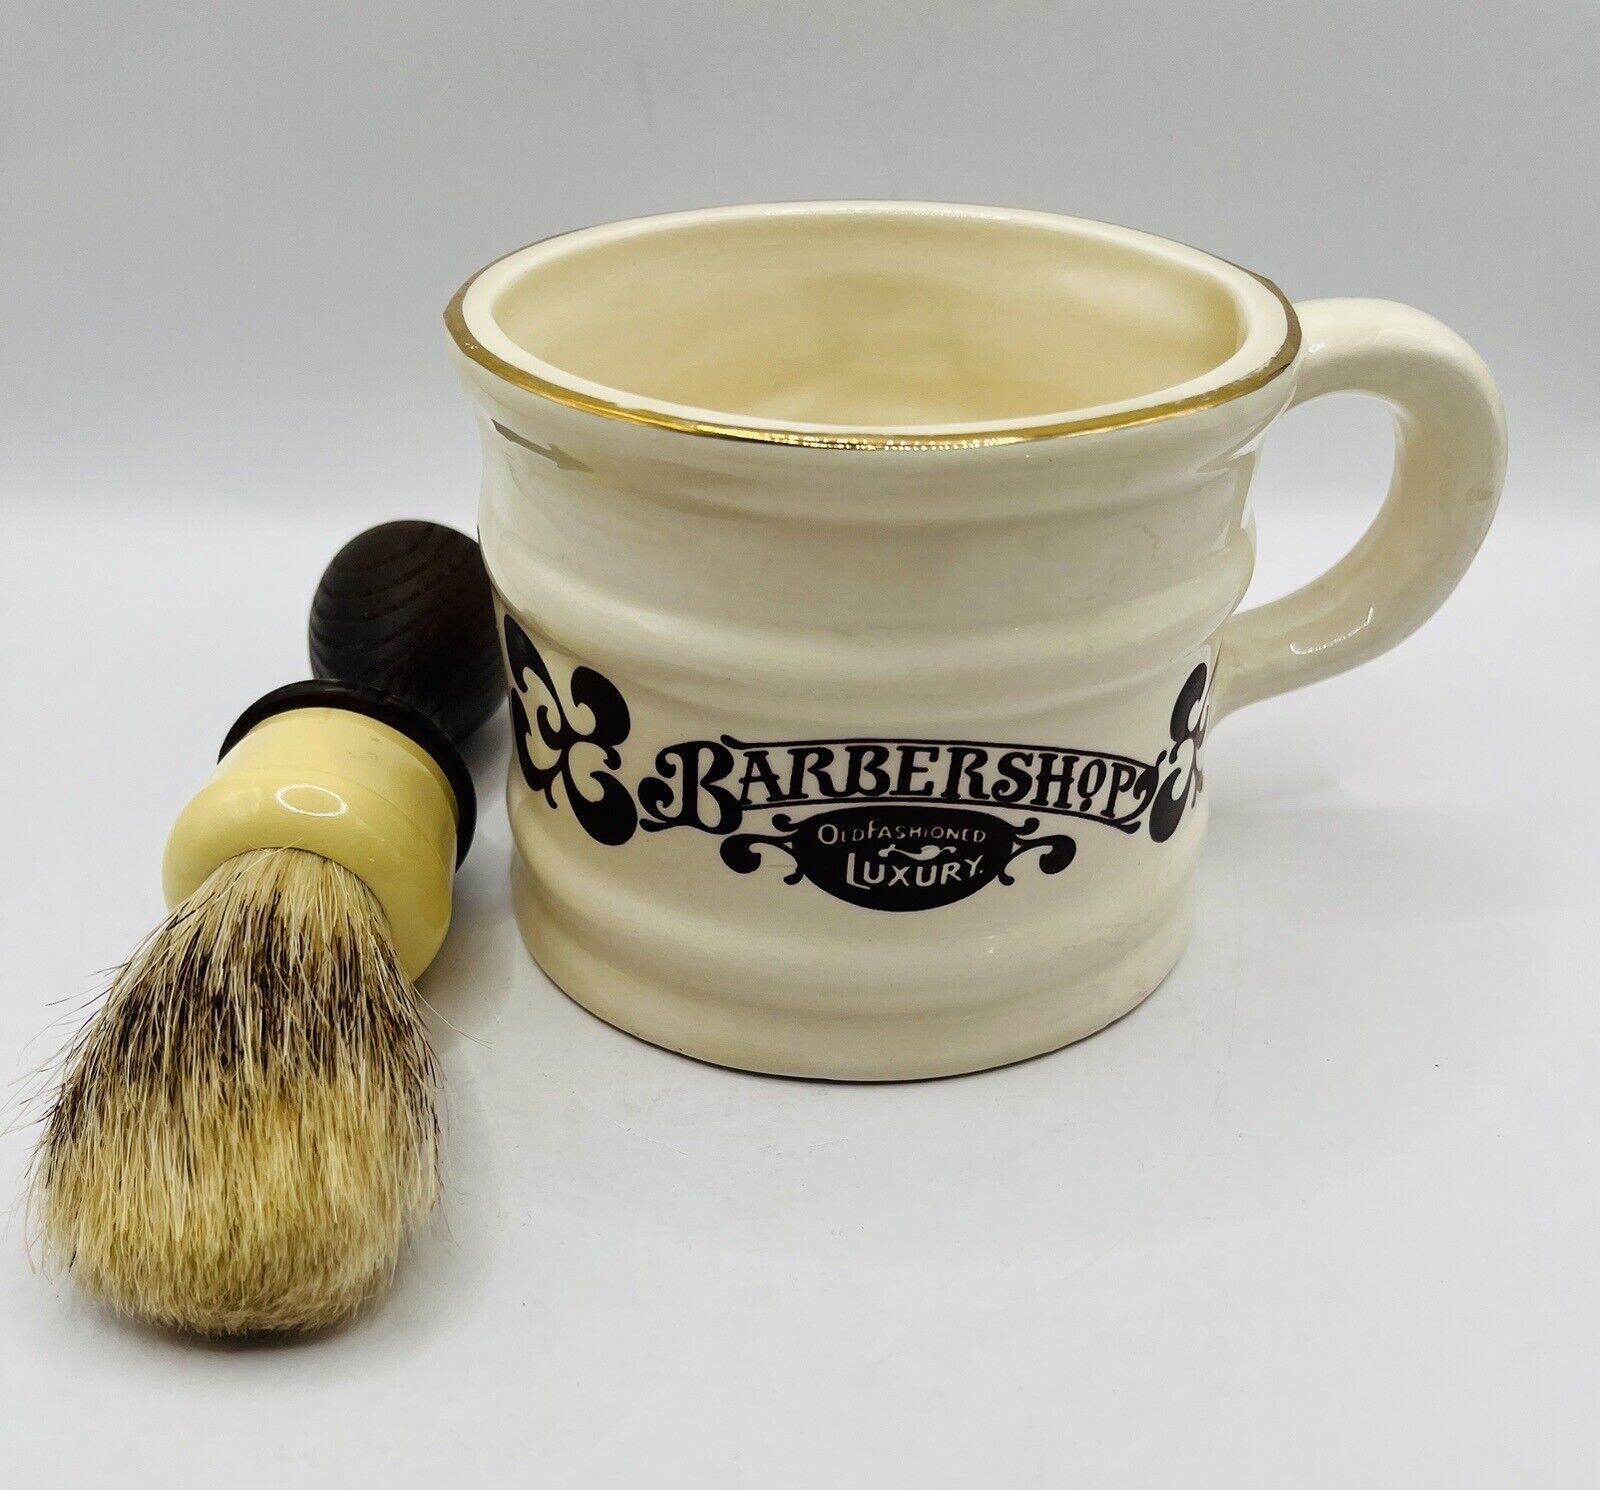 Vtg Barbershop Shaving Mug Brush Set 1976 Ceramic Mug Gold Accent Wood Handle